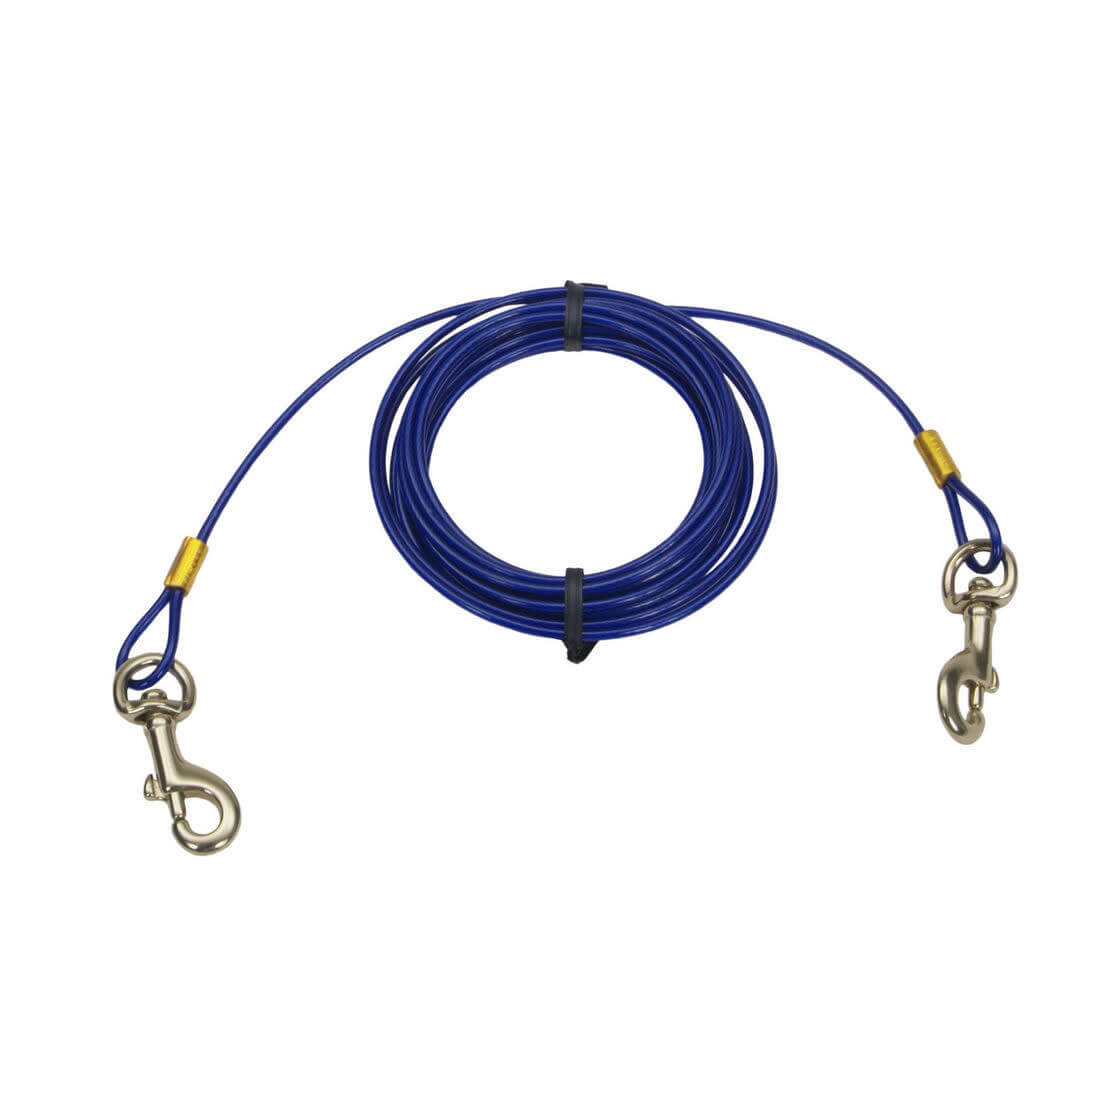 Titan Medium Cable Dog Tie Out 20 feet blue